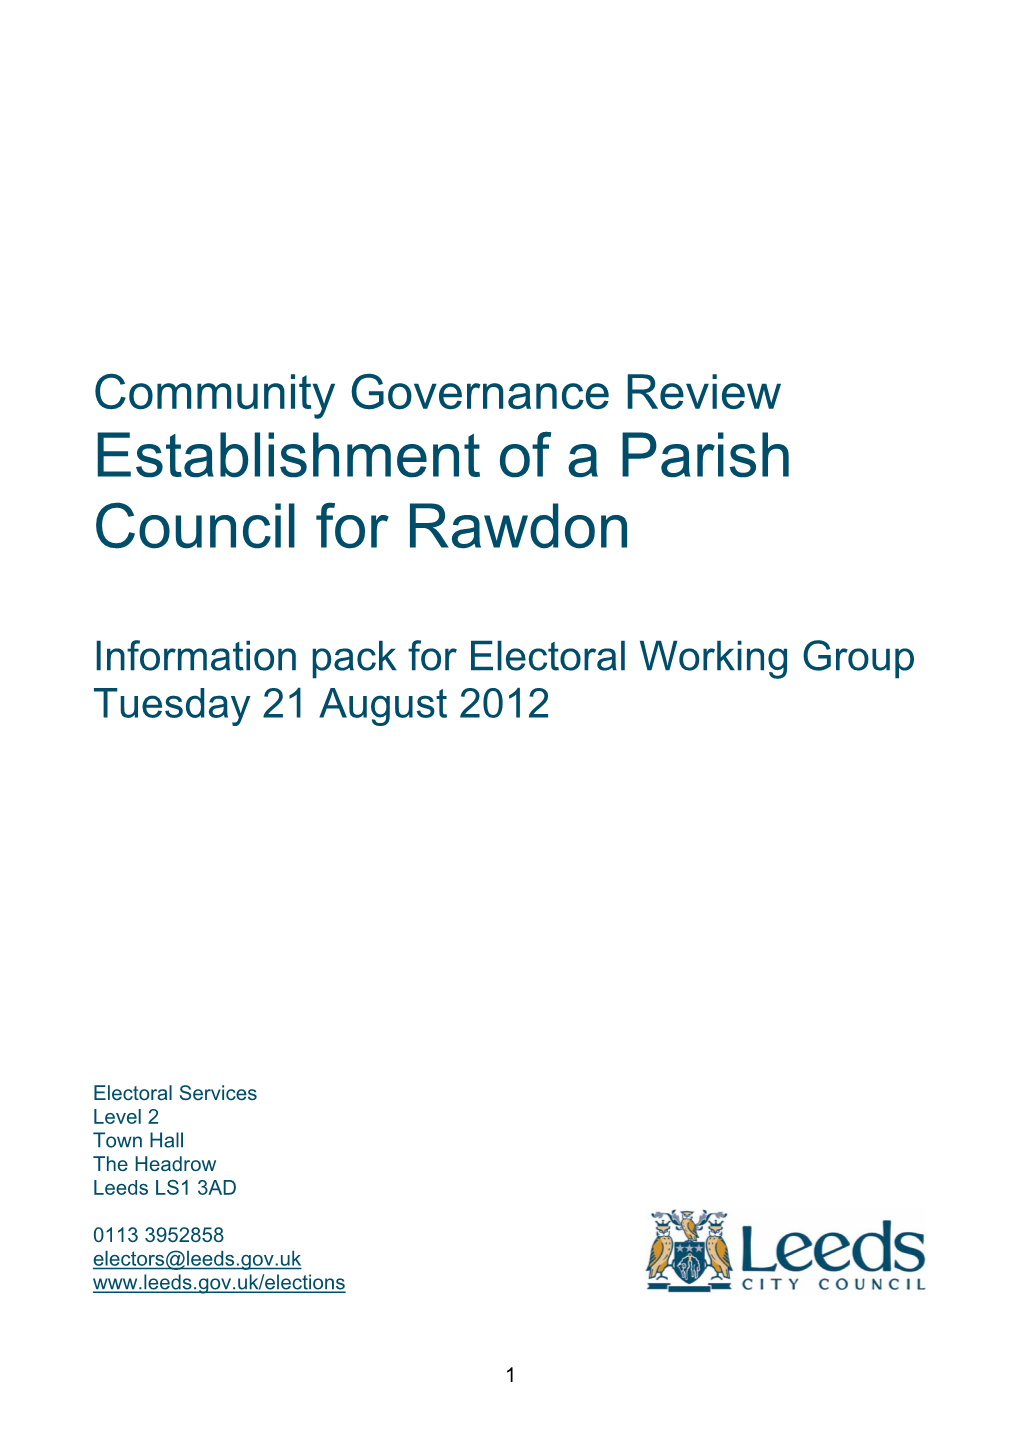 Establishment of a Parish Council for Rawdon